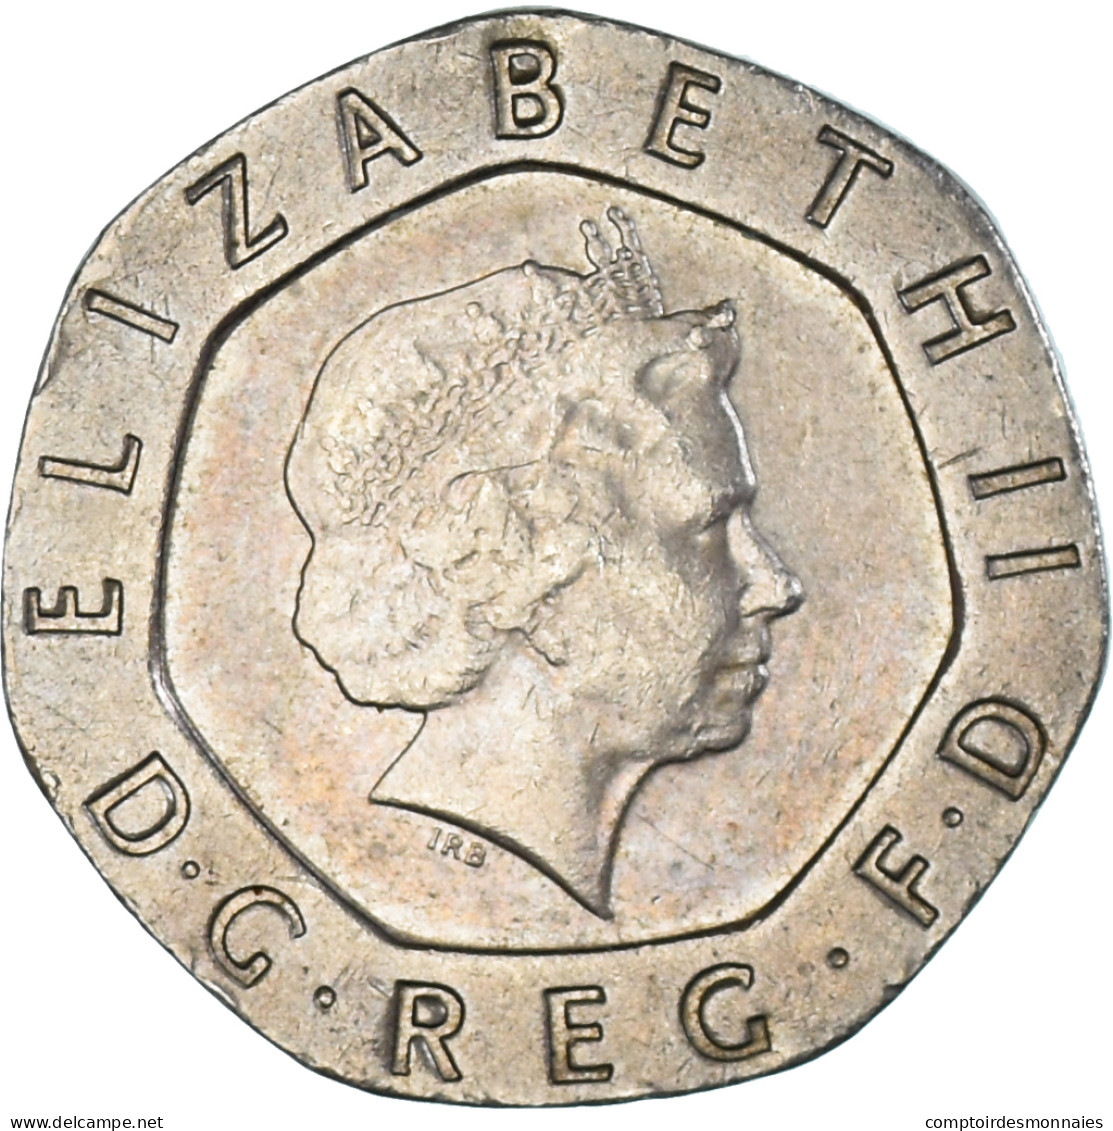 Monnaie, Grande-Bretagne, 20 Pence, 2006 - 20 Pence